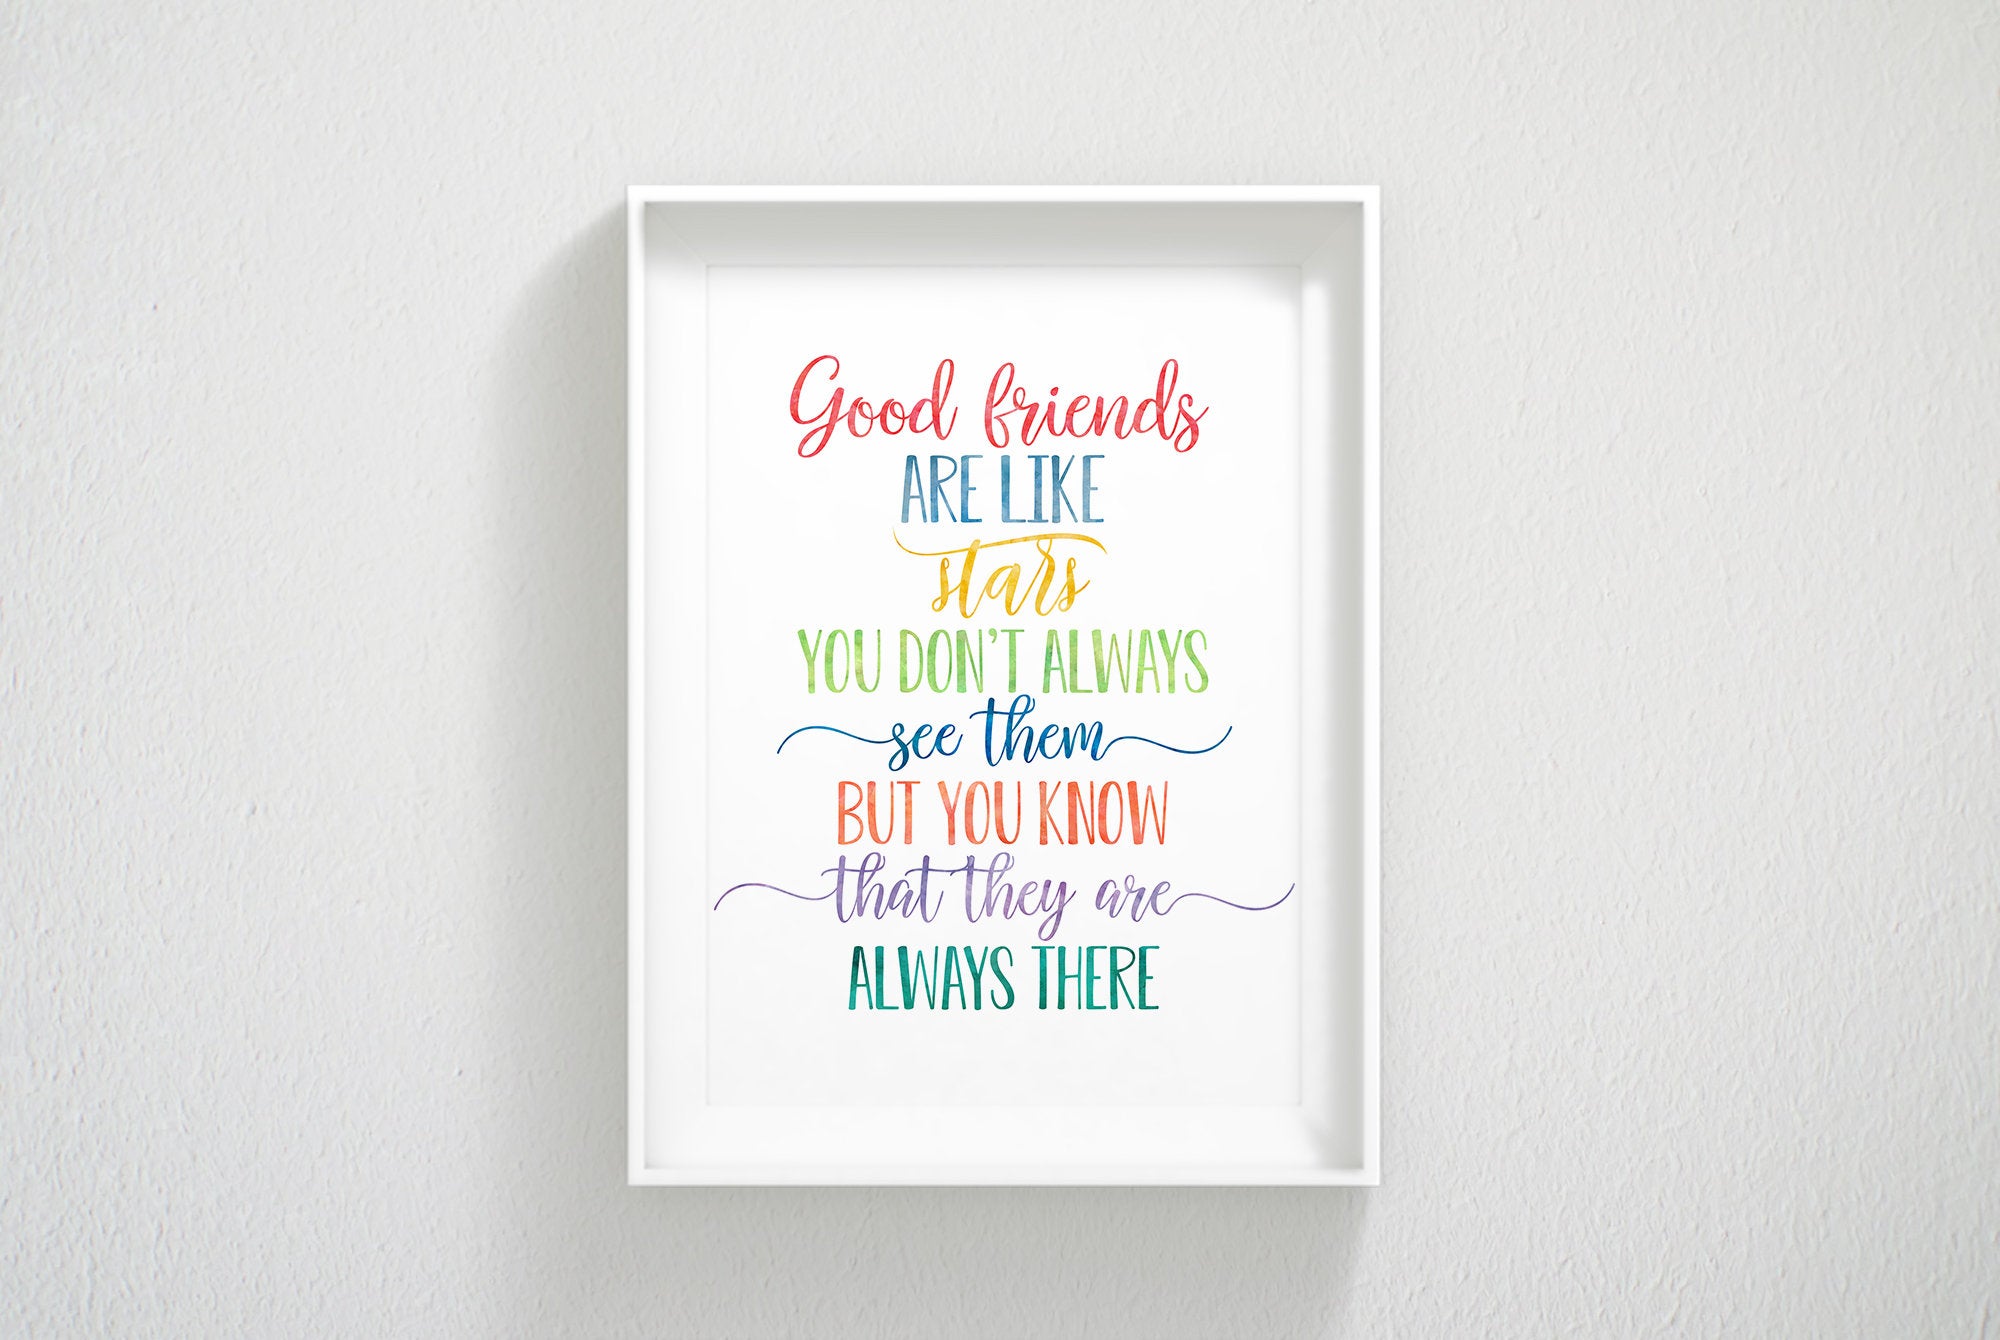 Good Friends Are Like Stars,Nursery Printable Decor,Motivational Wall Room Art